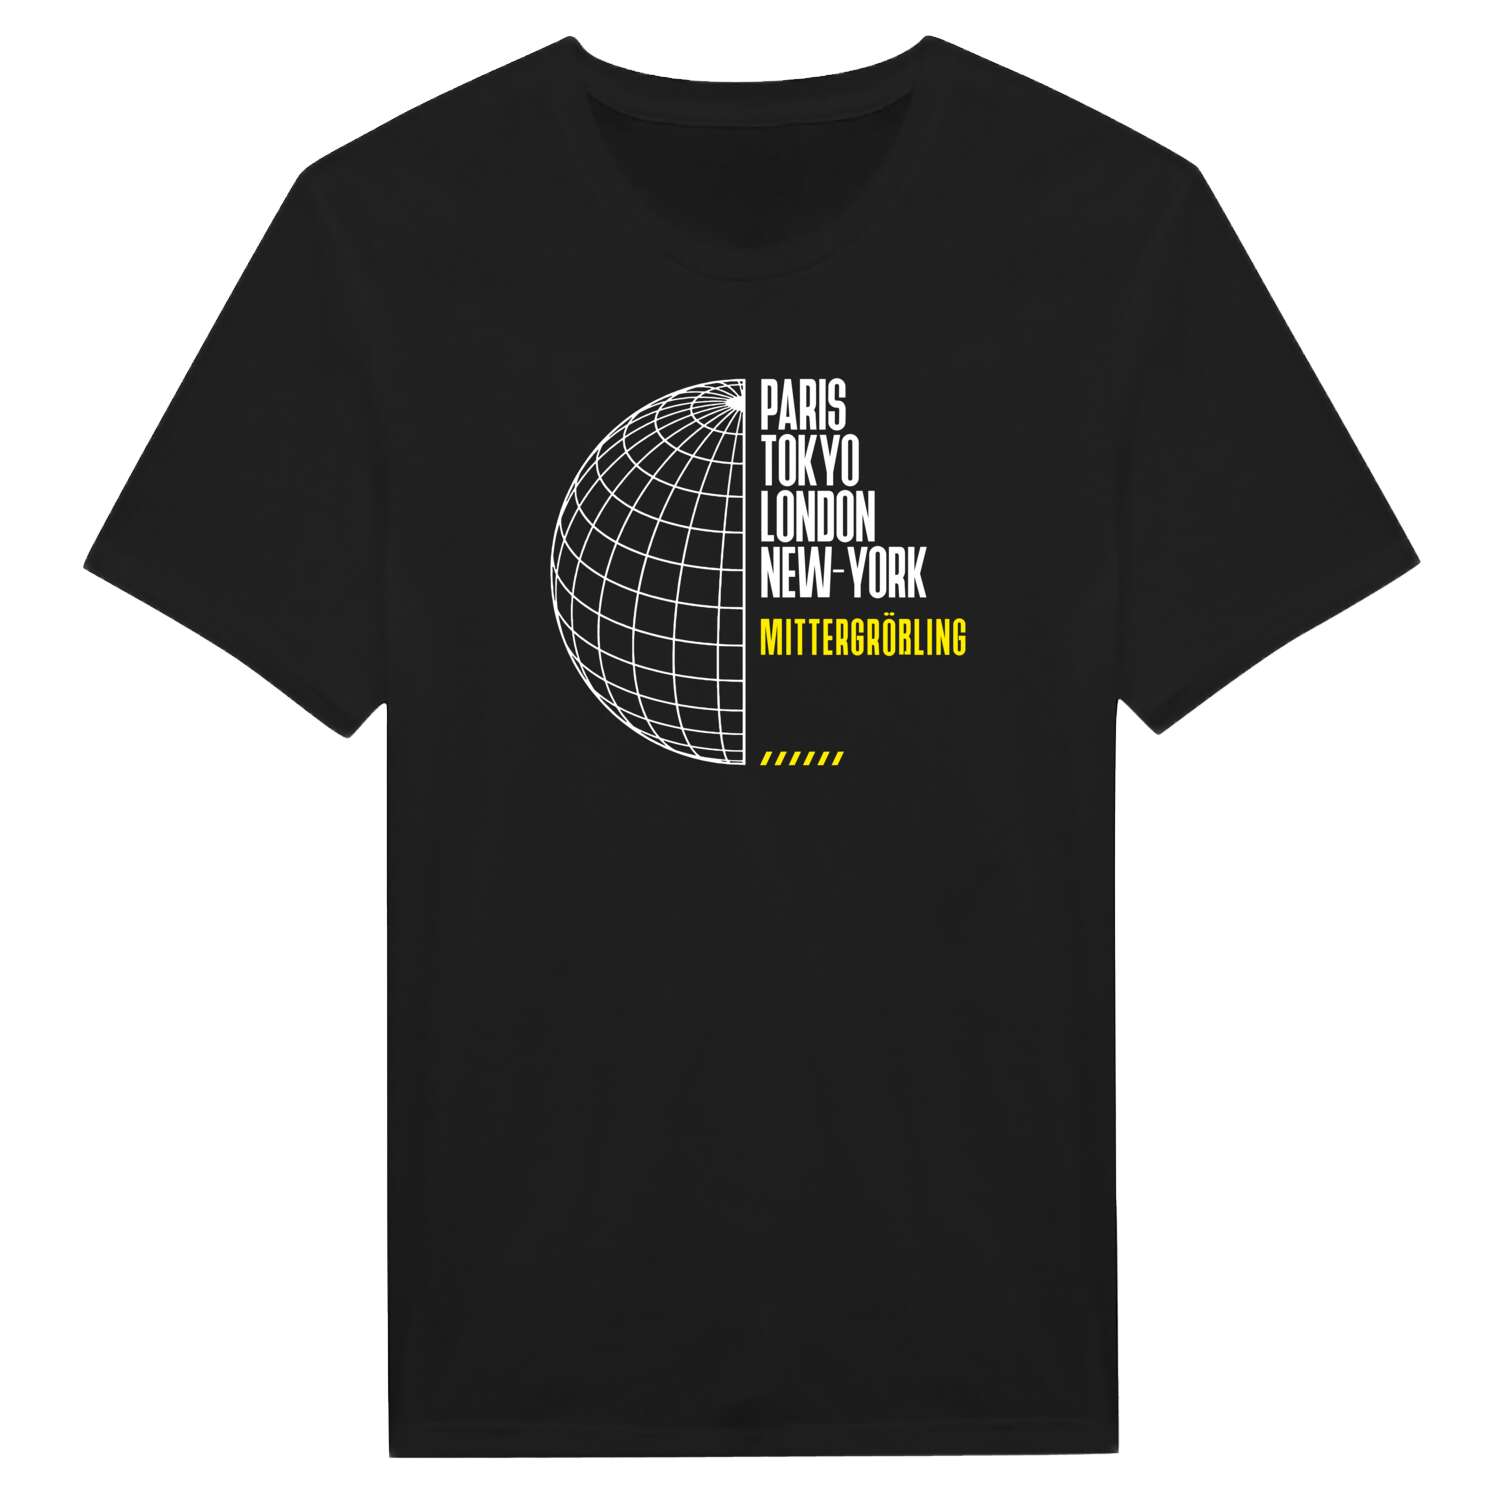 Mittergrößling T-Shirt »Paris Tokyo London«